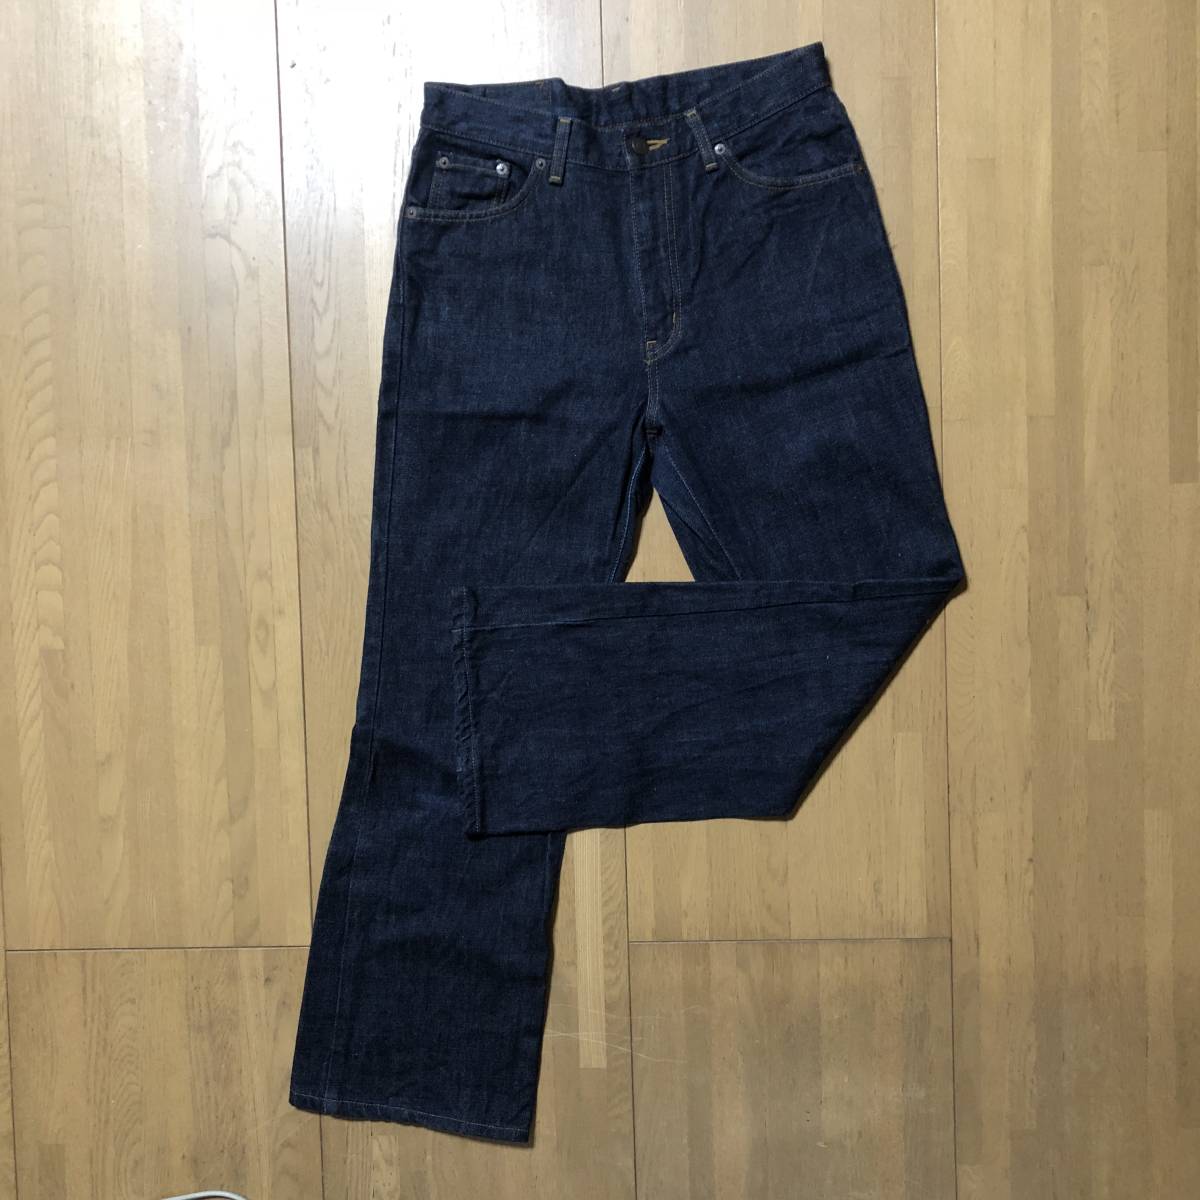  prompt decision EDWIN Edwin 401 jeans Denim 31 -inch waist 78cm dark blue men's indigo 